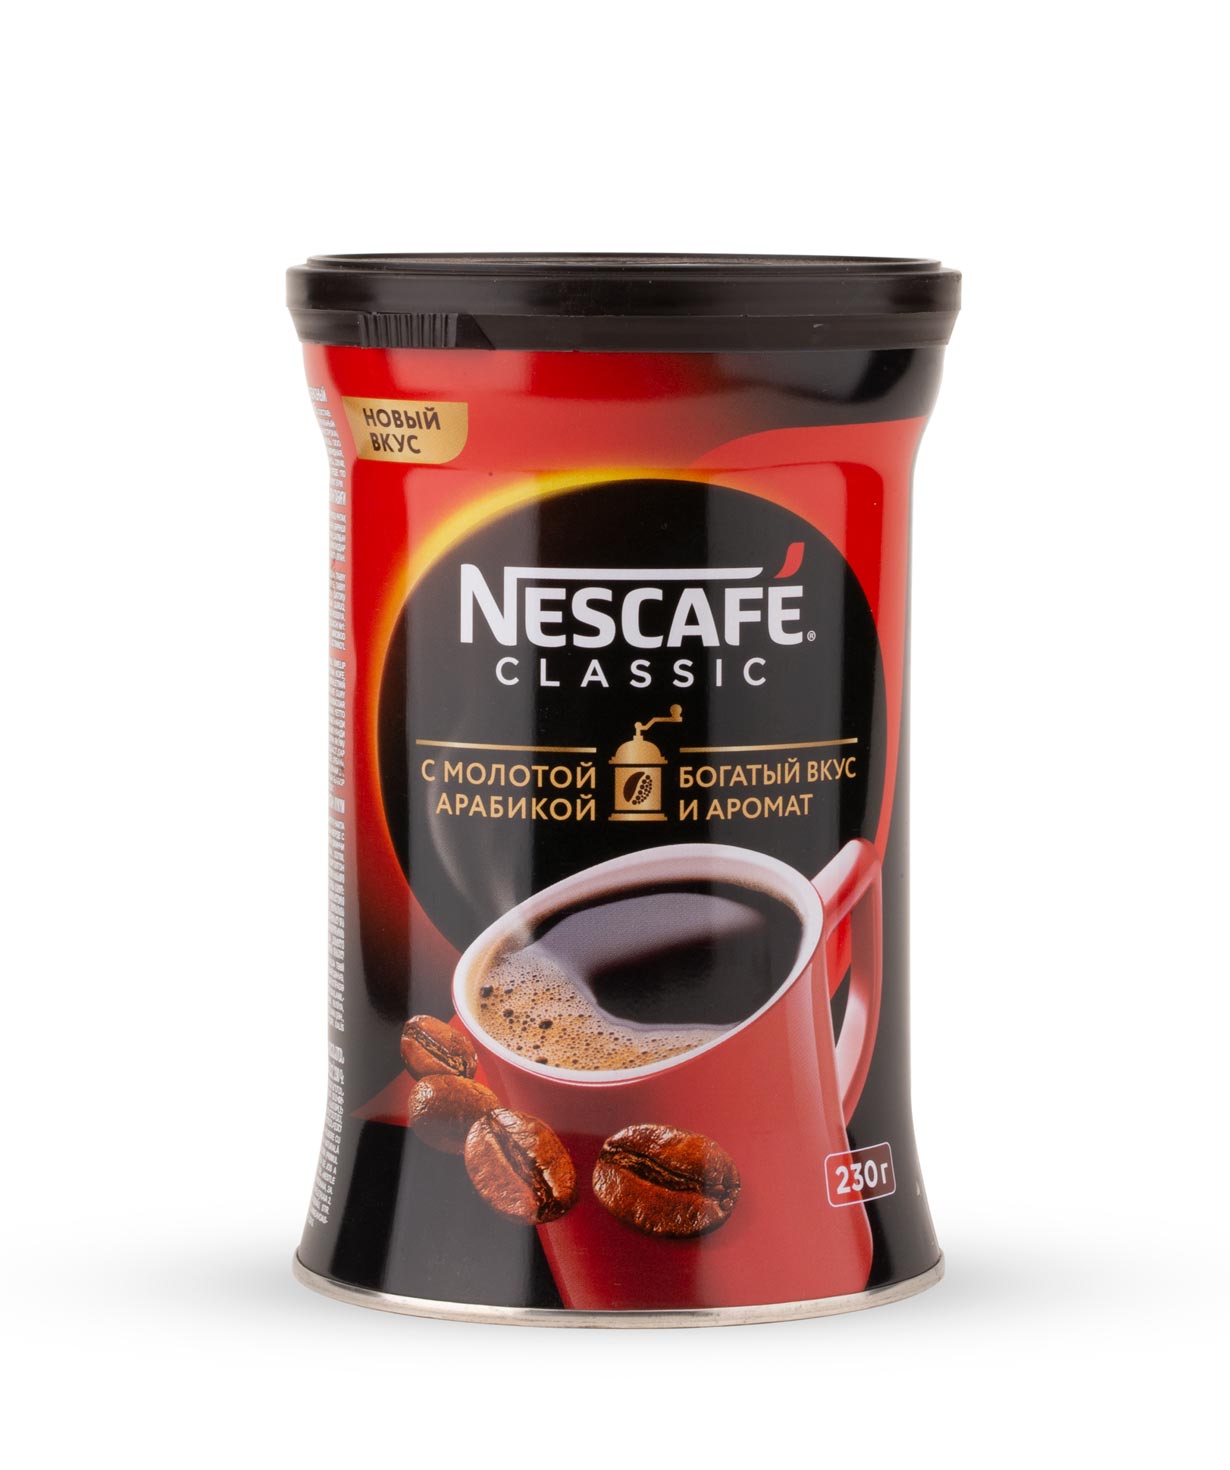 Սուրճ լուծվող «Nescafe Classic» 230գ